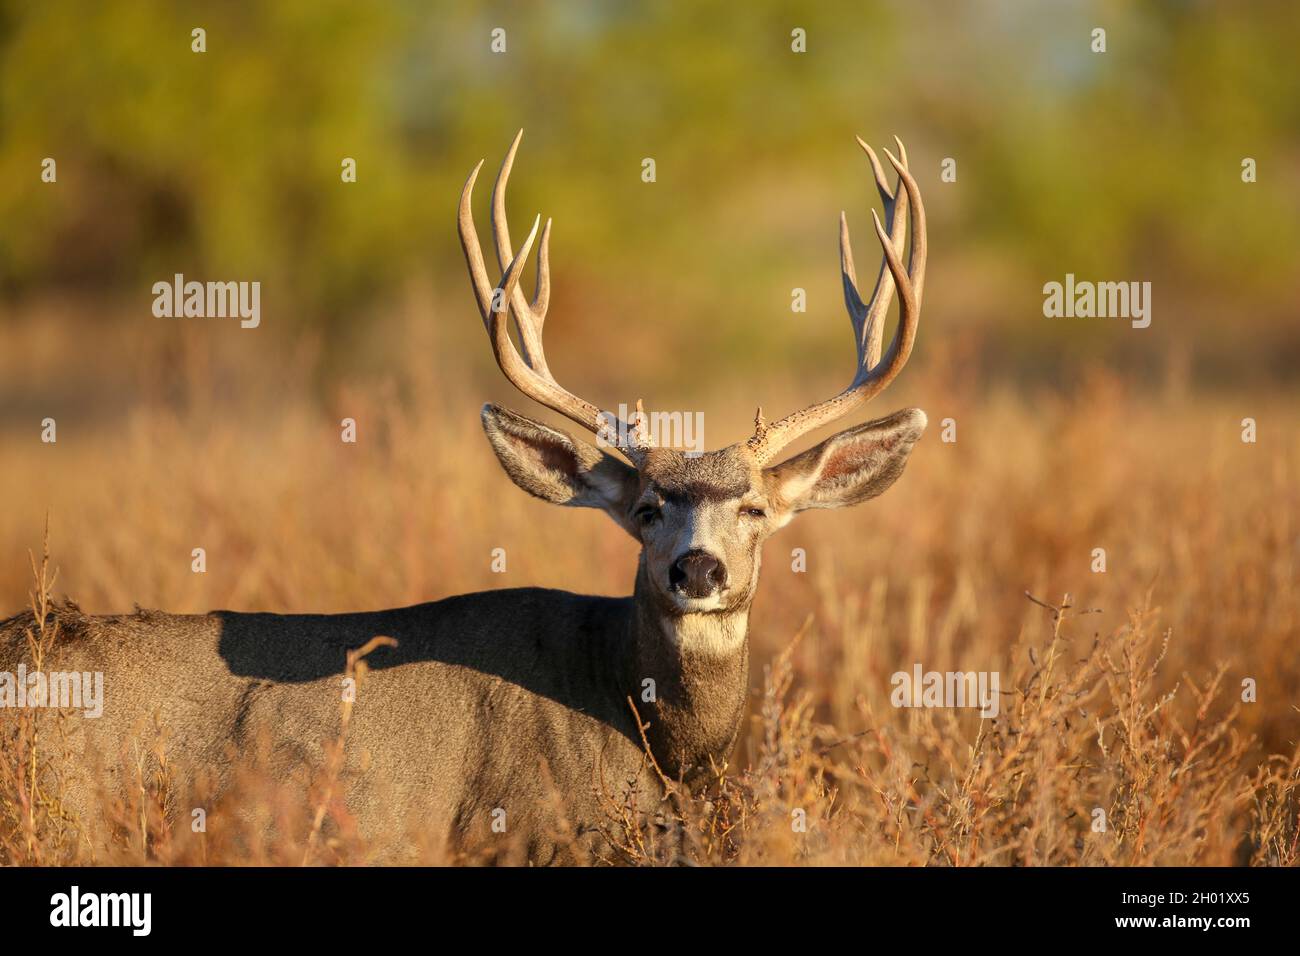 Mule deer buck portrait with large antlers Stock Photo